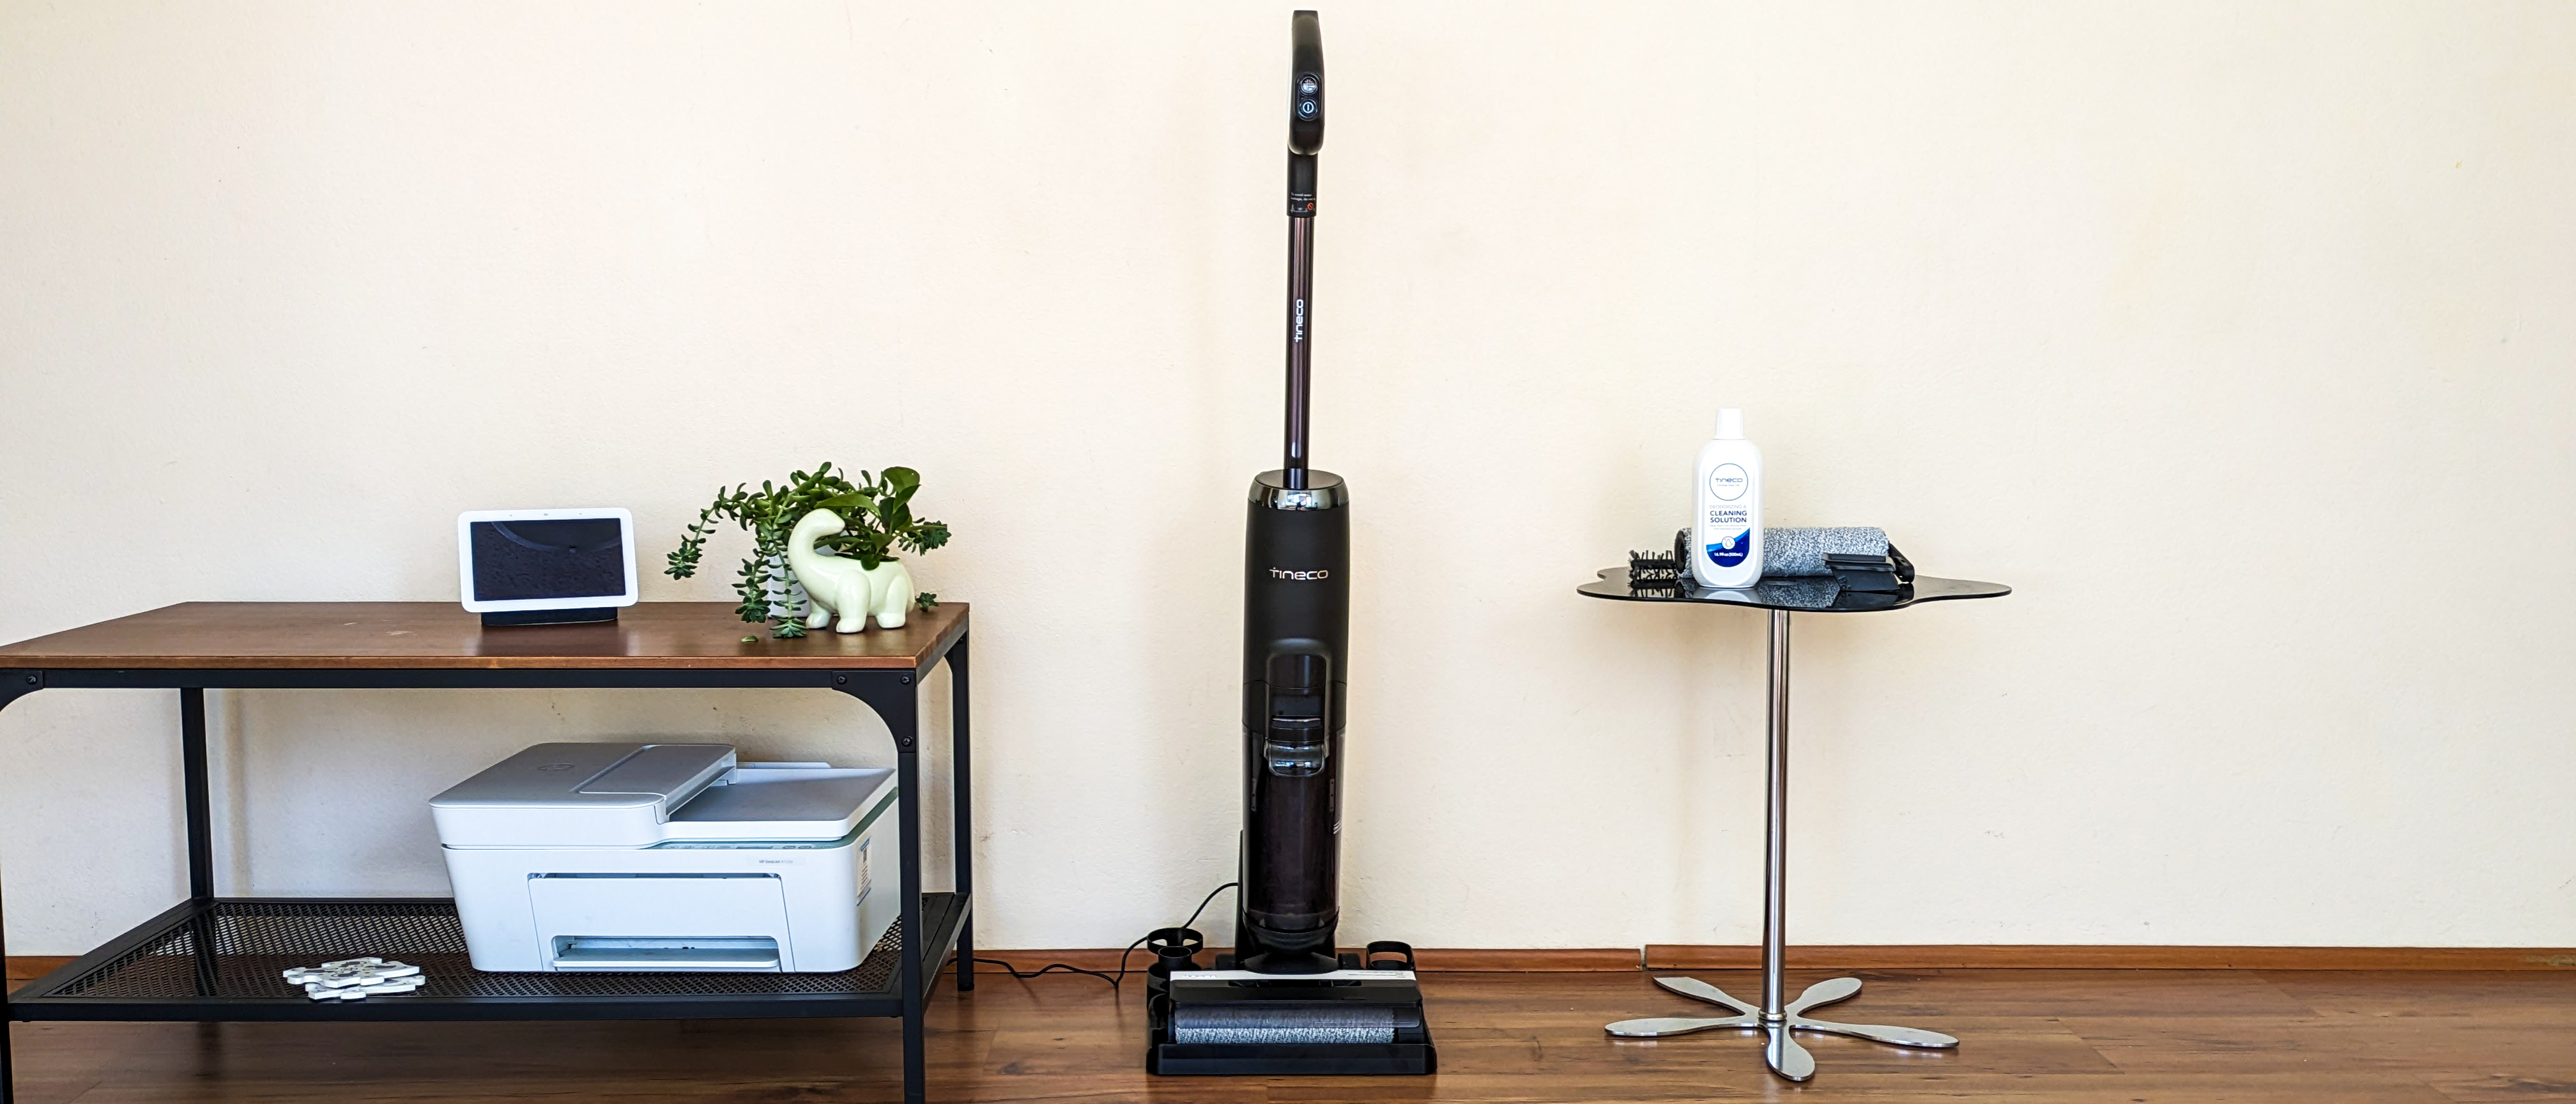 Tineco Floor One S5 Pro vacuum mop hard floor cleaner (cleaning review) -  Cybershack